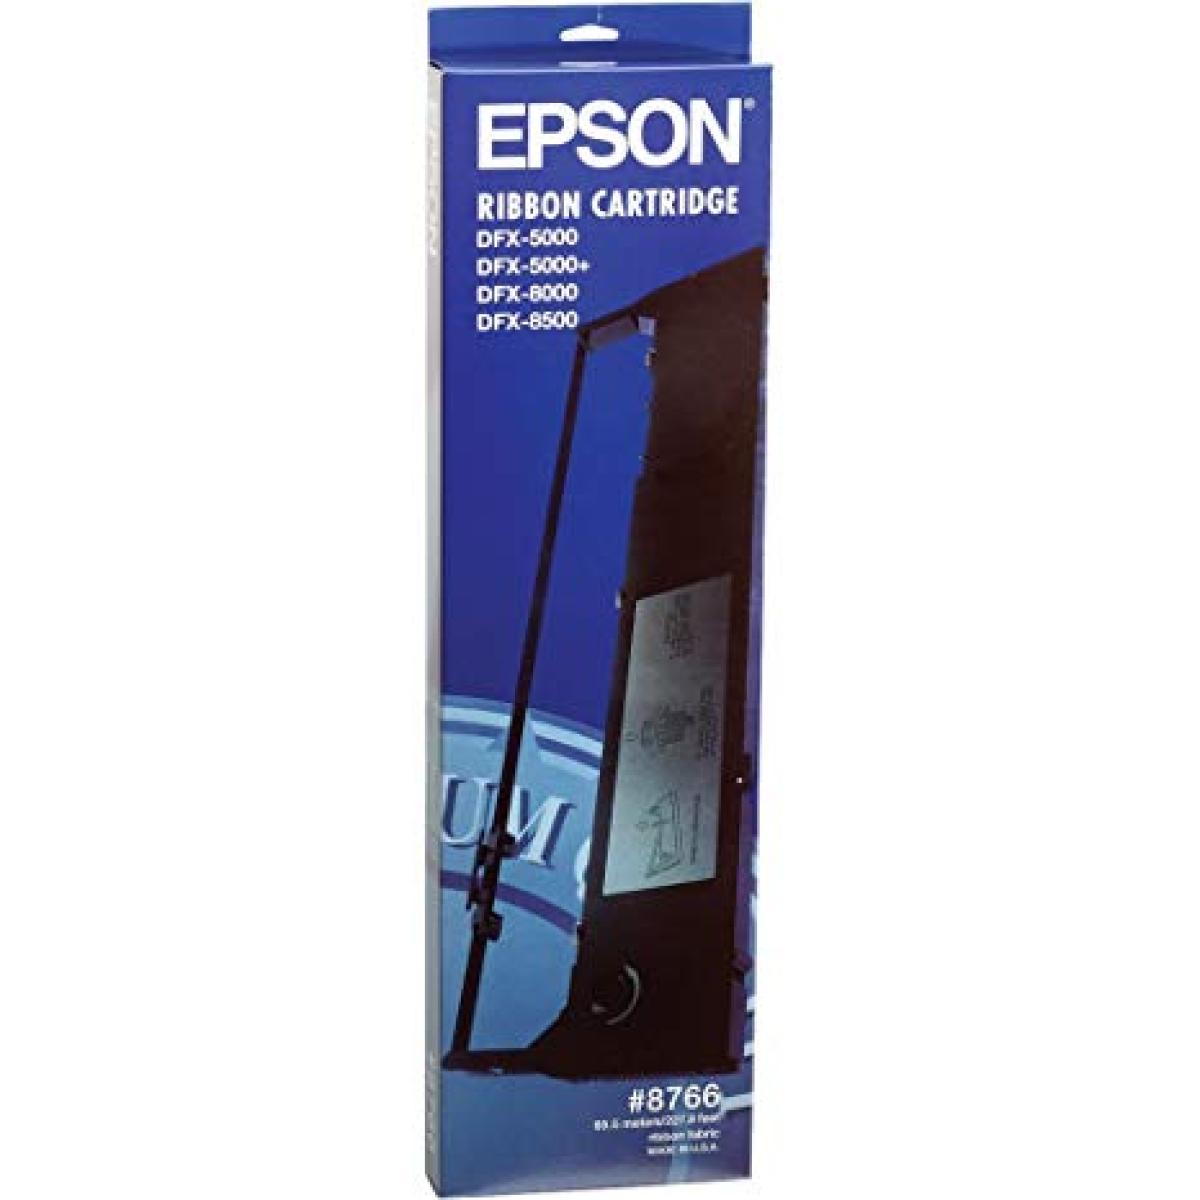 Ribbon Cartridge LQ 300/450/570/800/580 (Original)